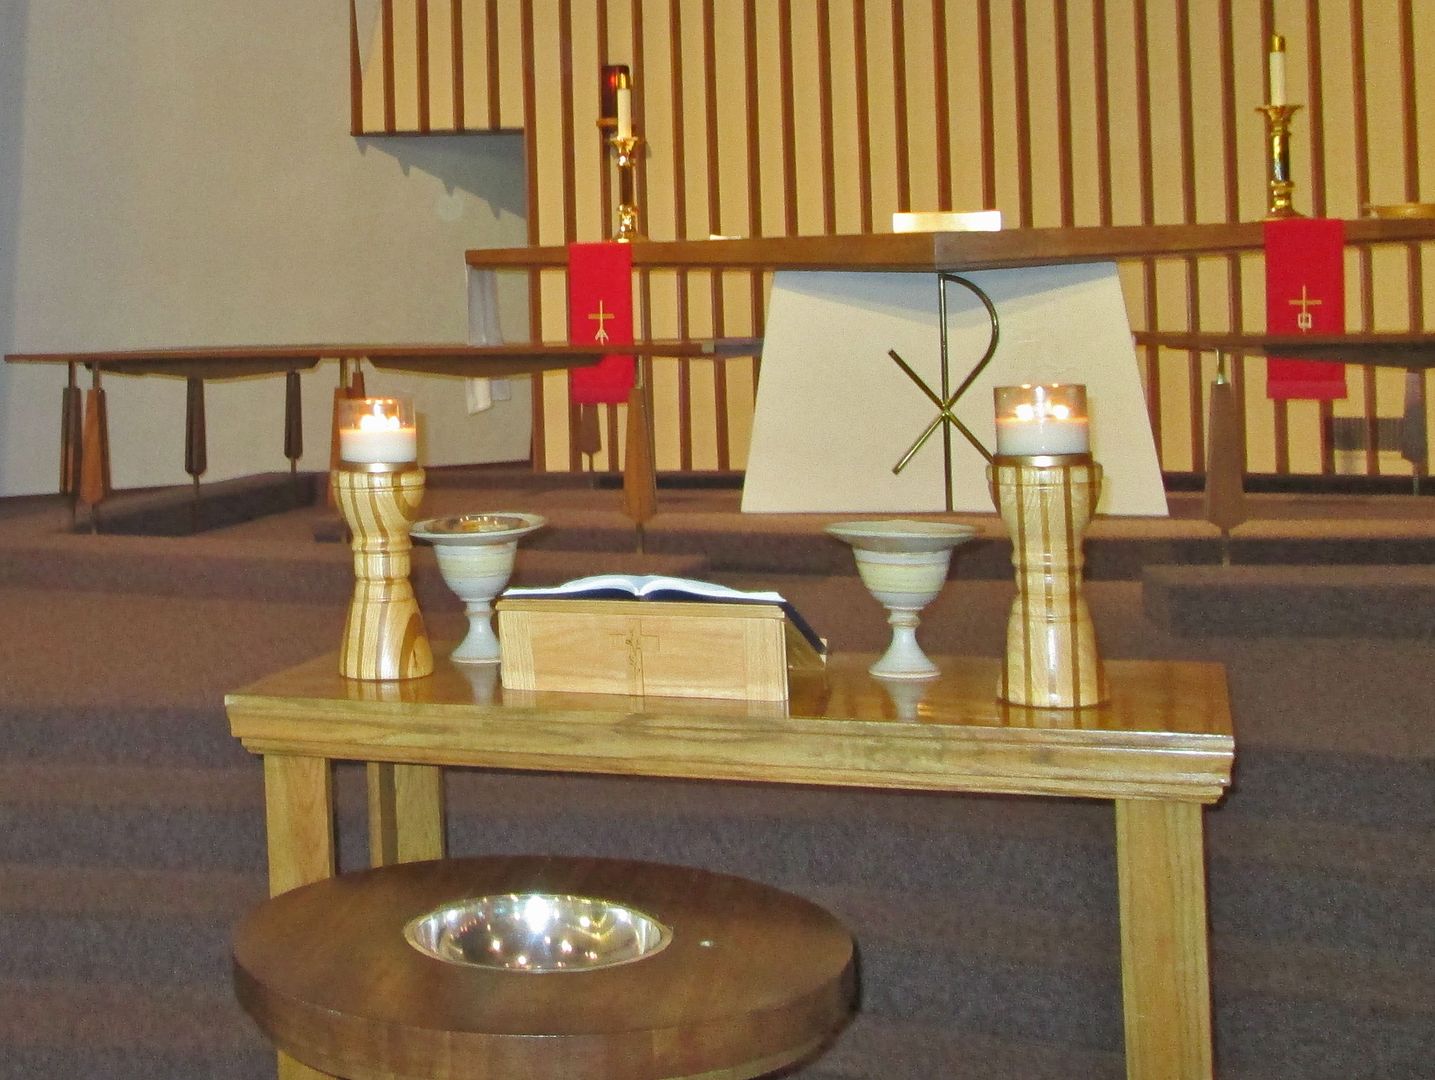 Pentecost liturgy